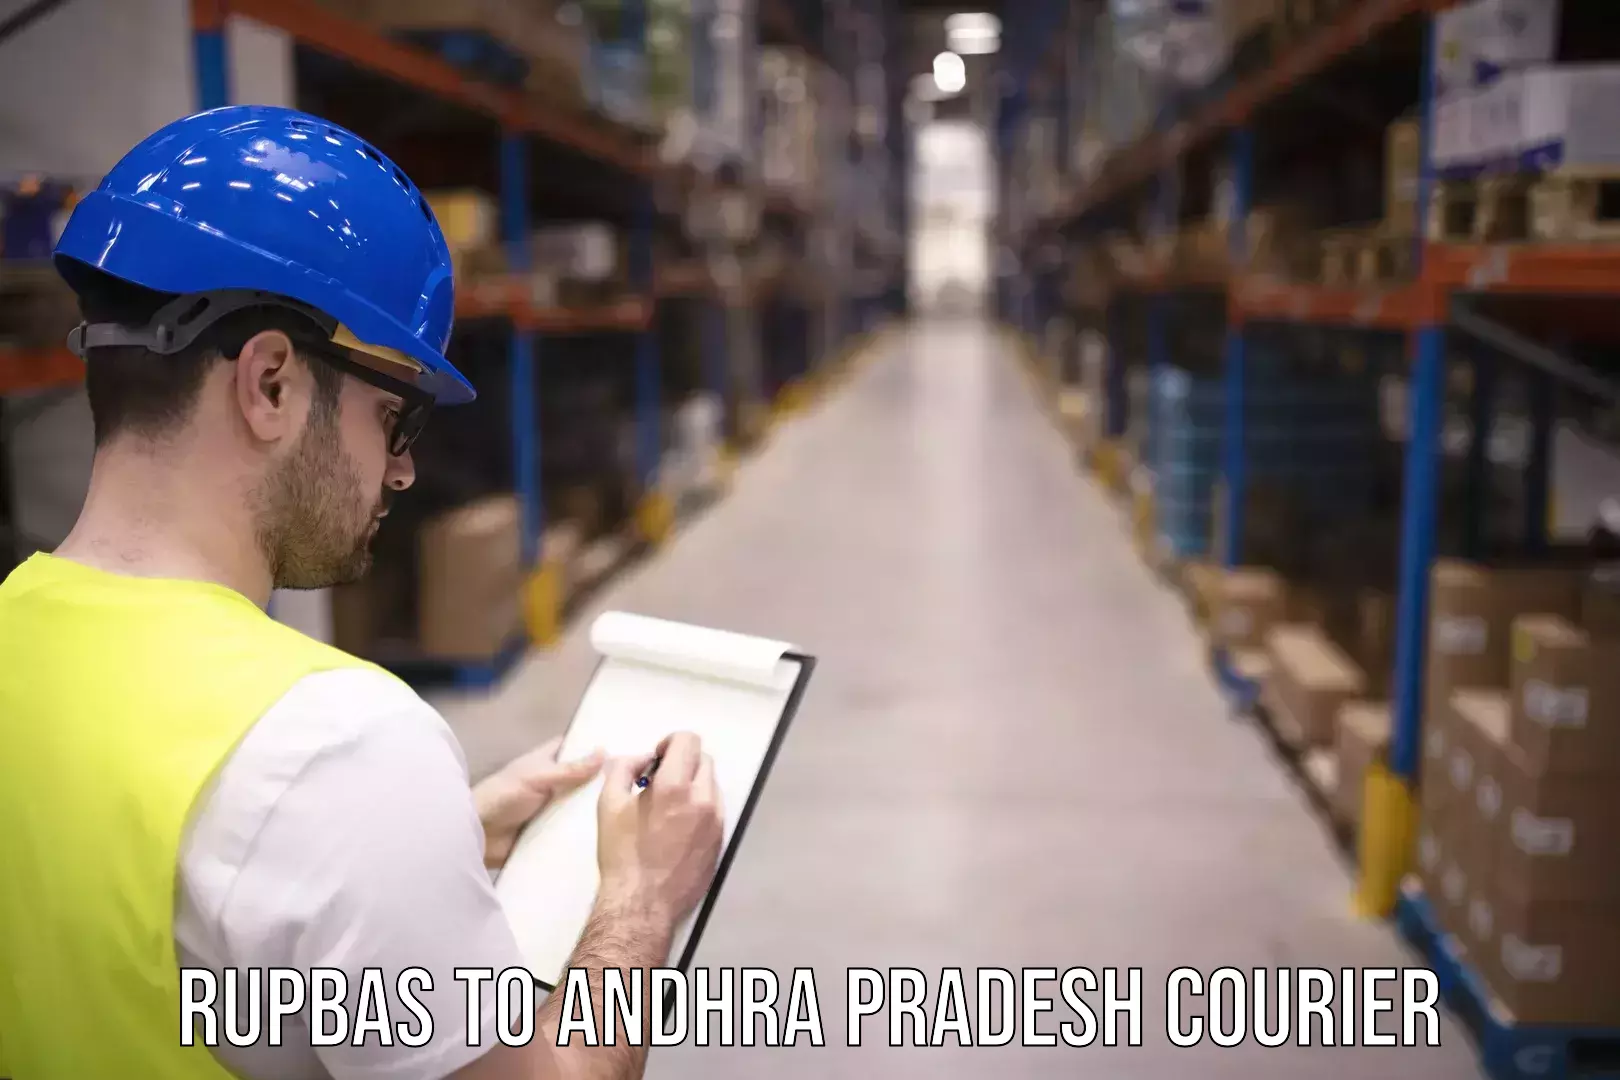 On-call courier service Rupbas to Andhra Pradesh